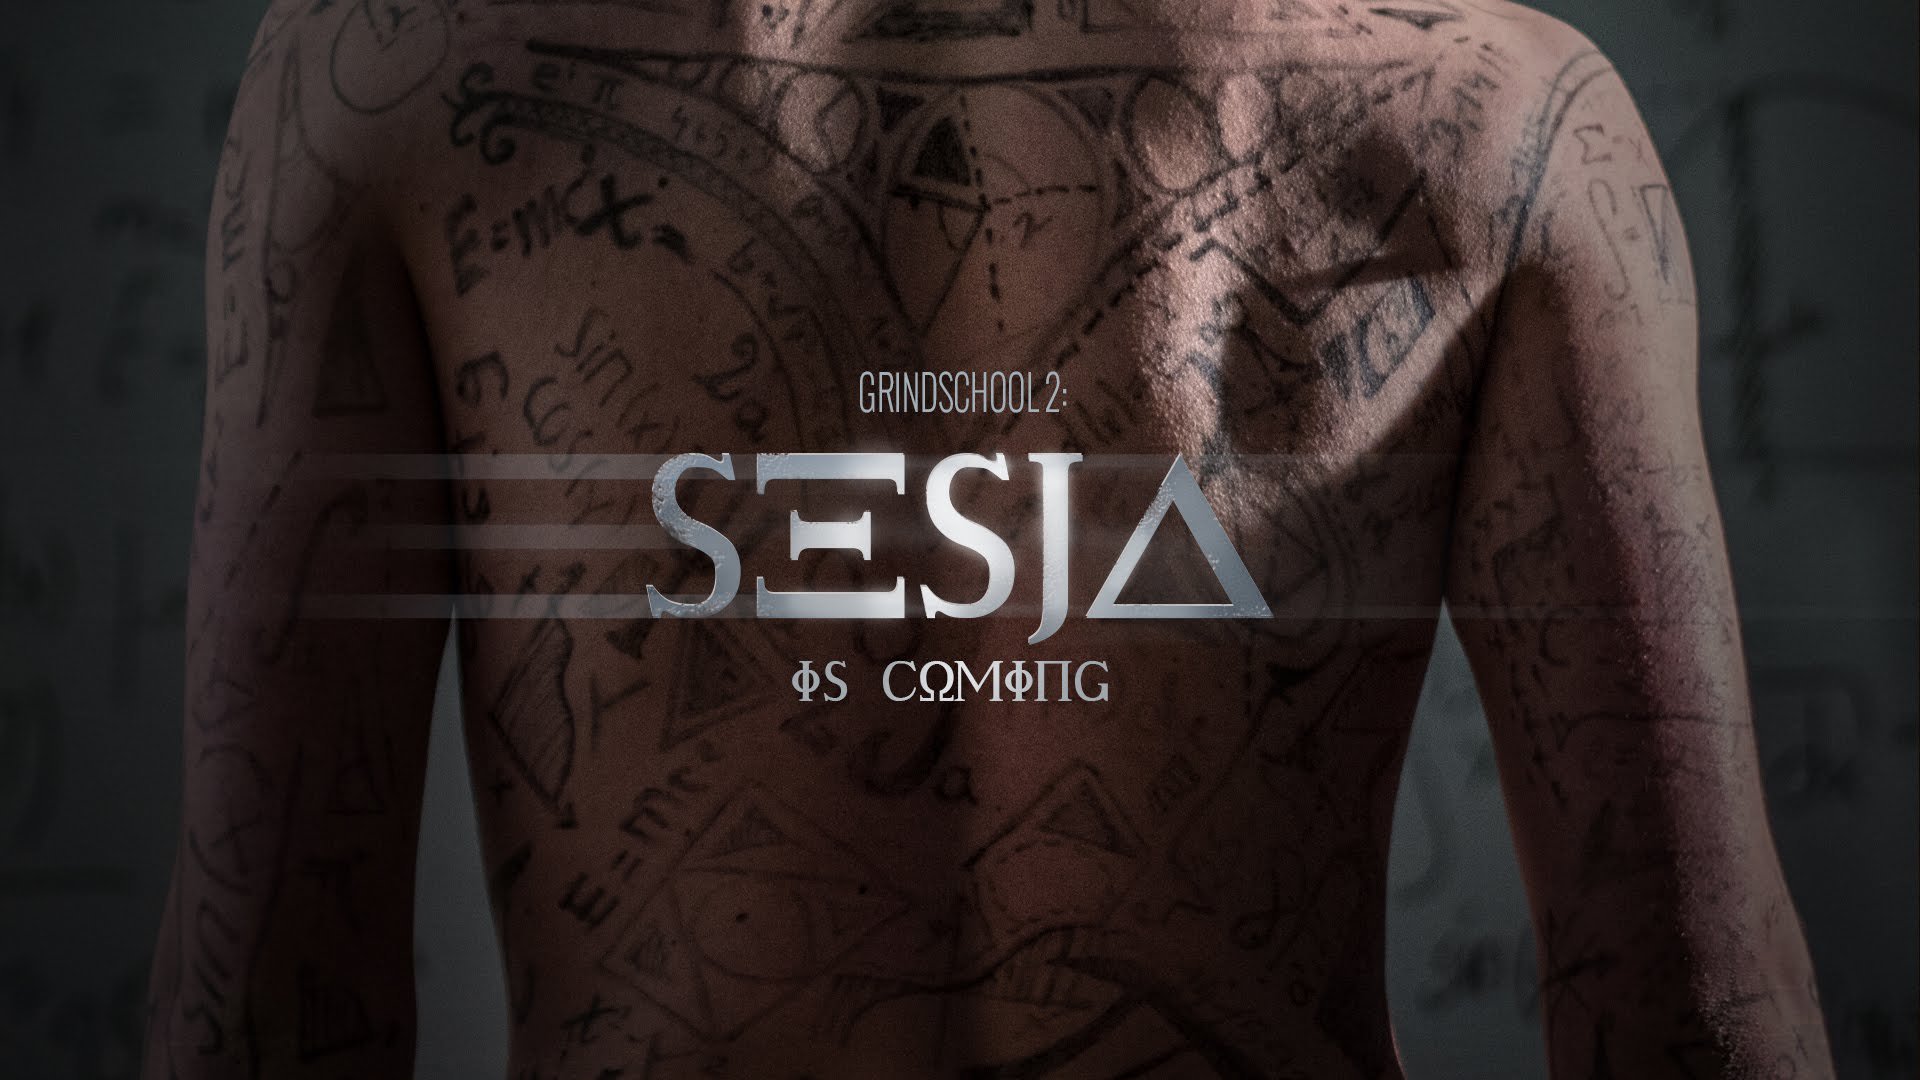 Sesja is coming –  